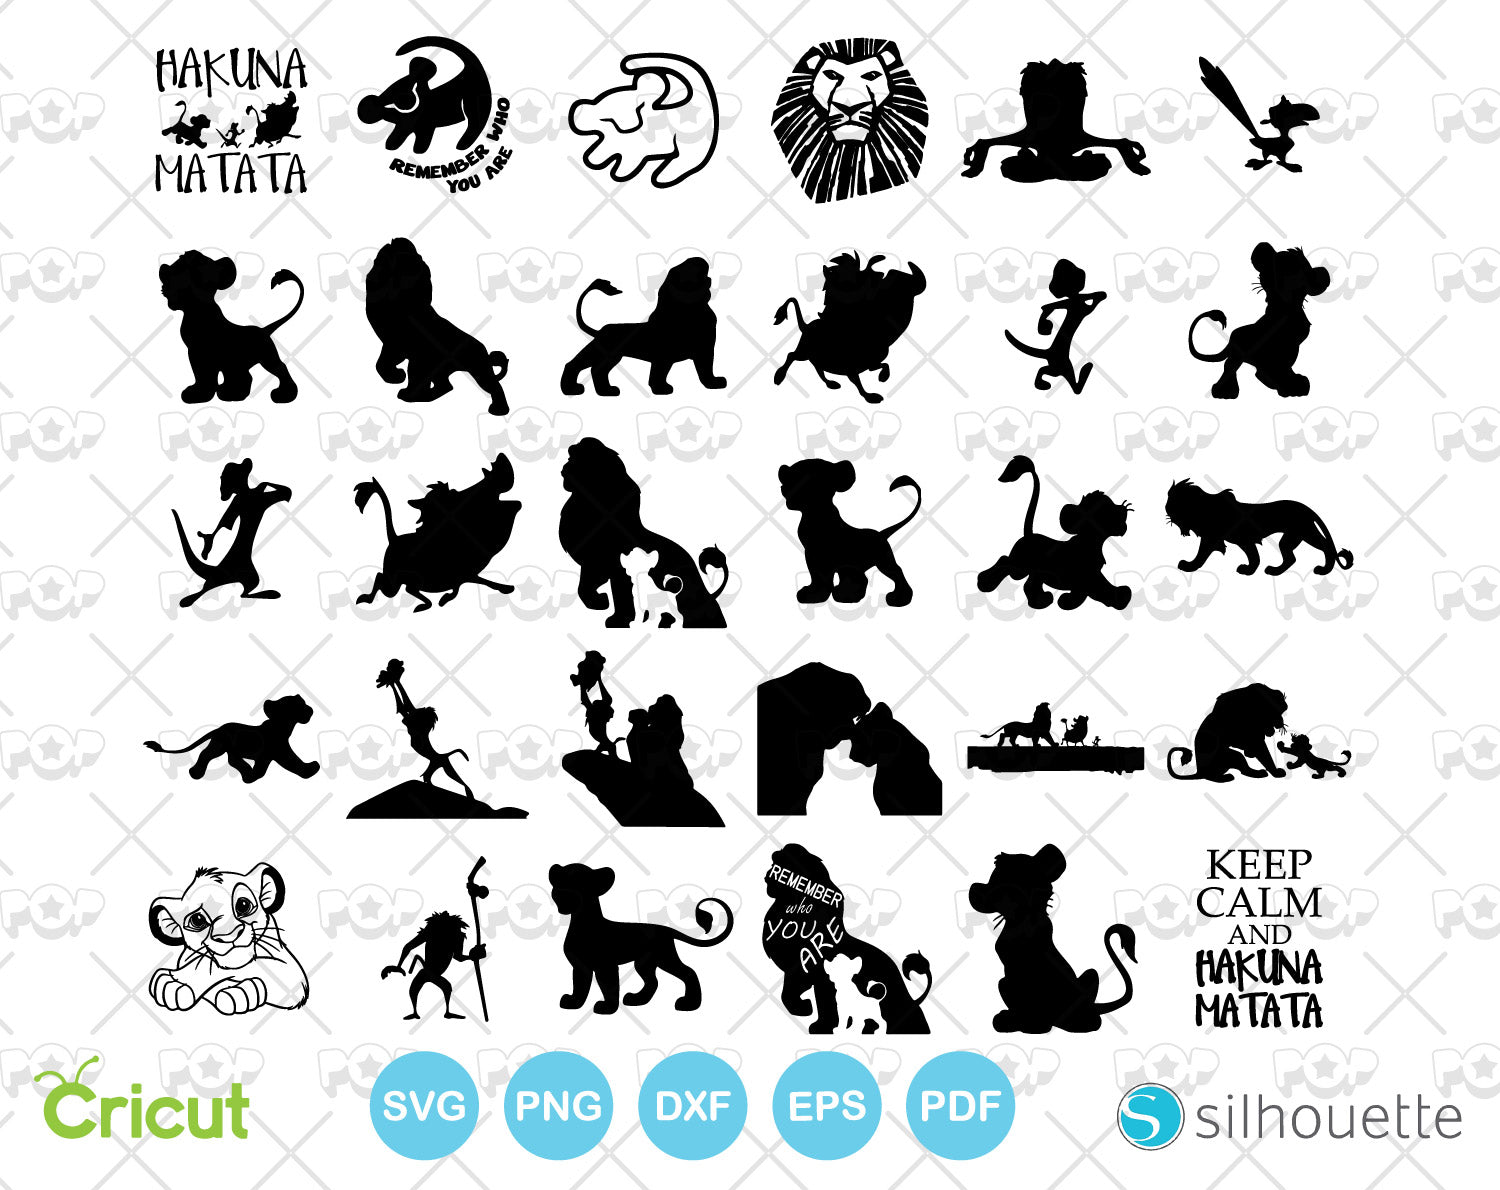 The Lion King 55 cliparts bundle, Disney Lion King SVG cutting files ...